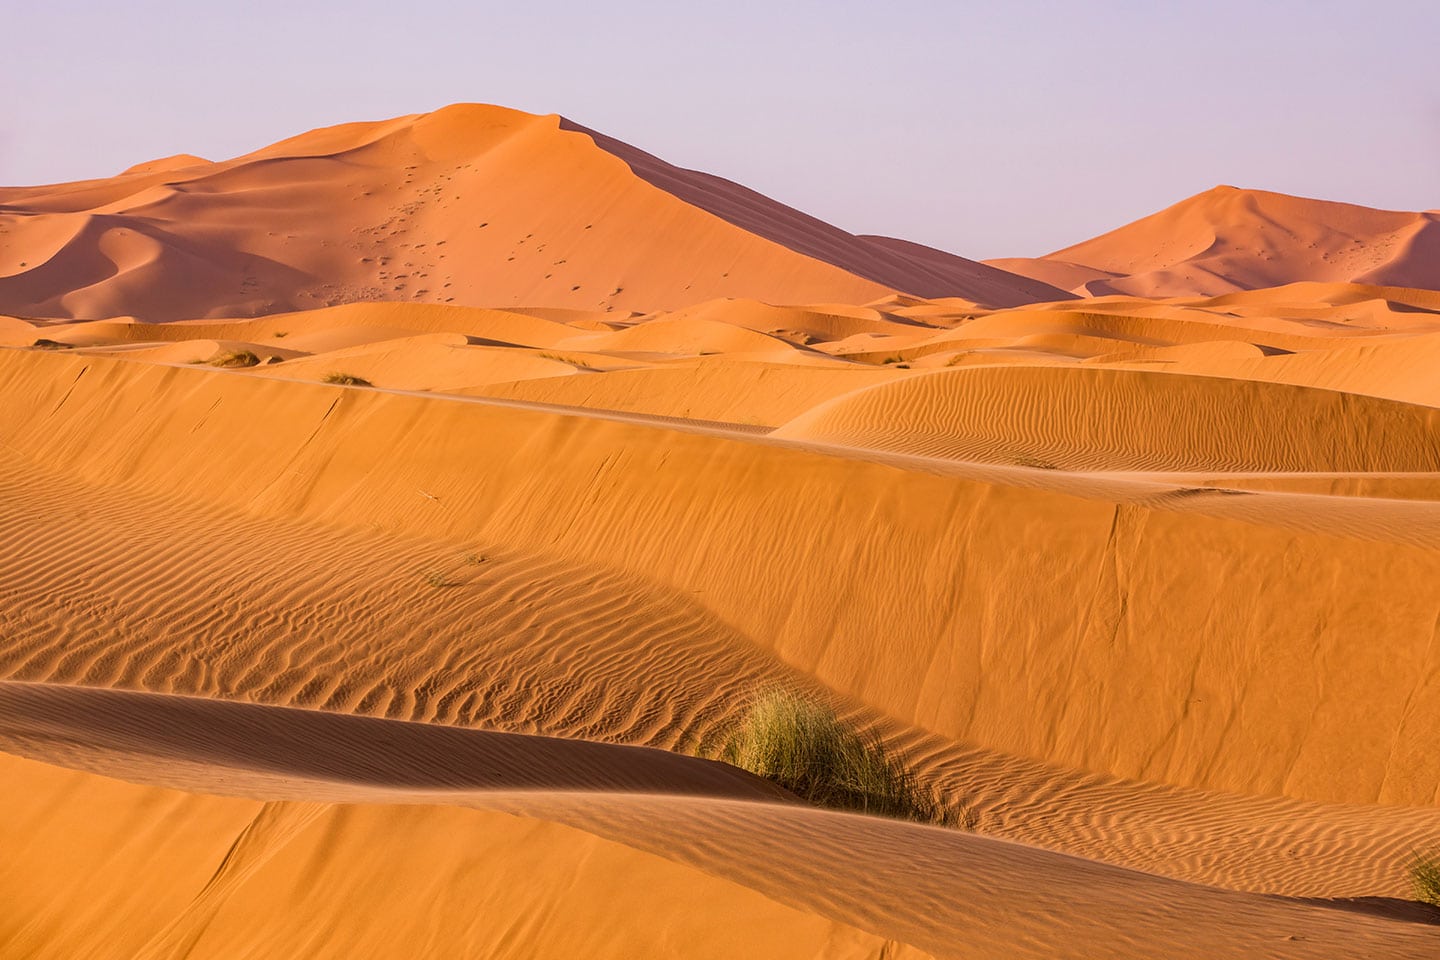 Sunset over the sand dunes of the Sahara Desert in Morocco